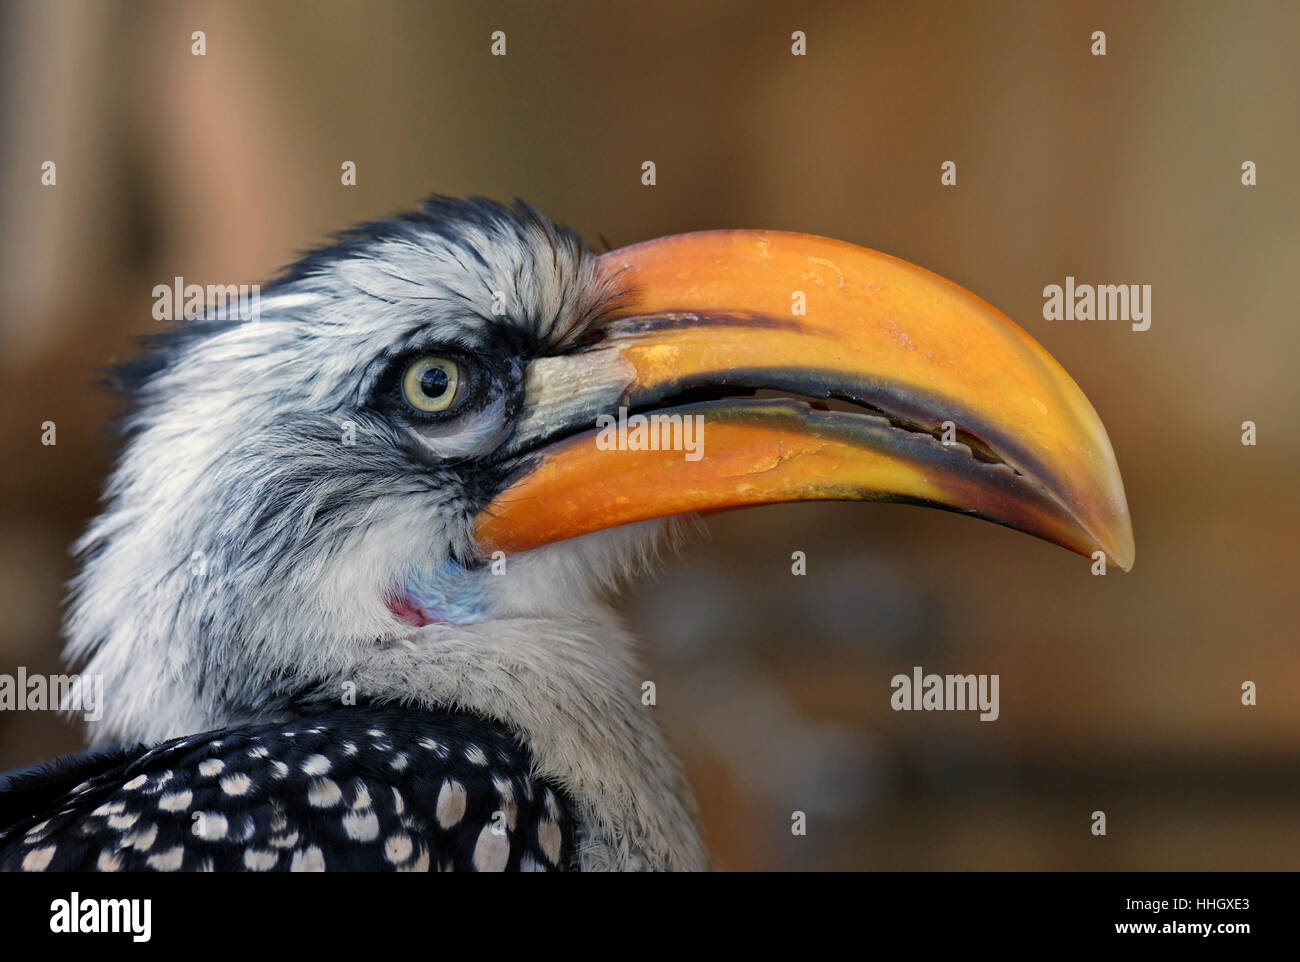 africa, beak, south africa, beaks, animal, bird, fauna, africa, animals, birds, Stock Photo